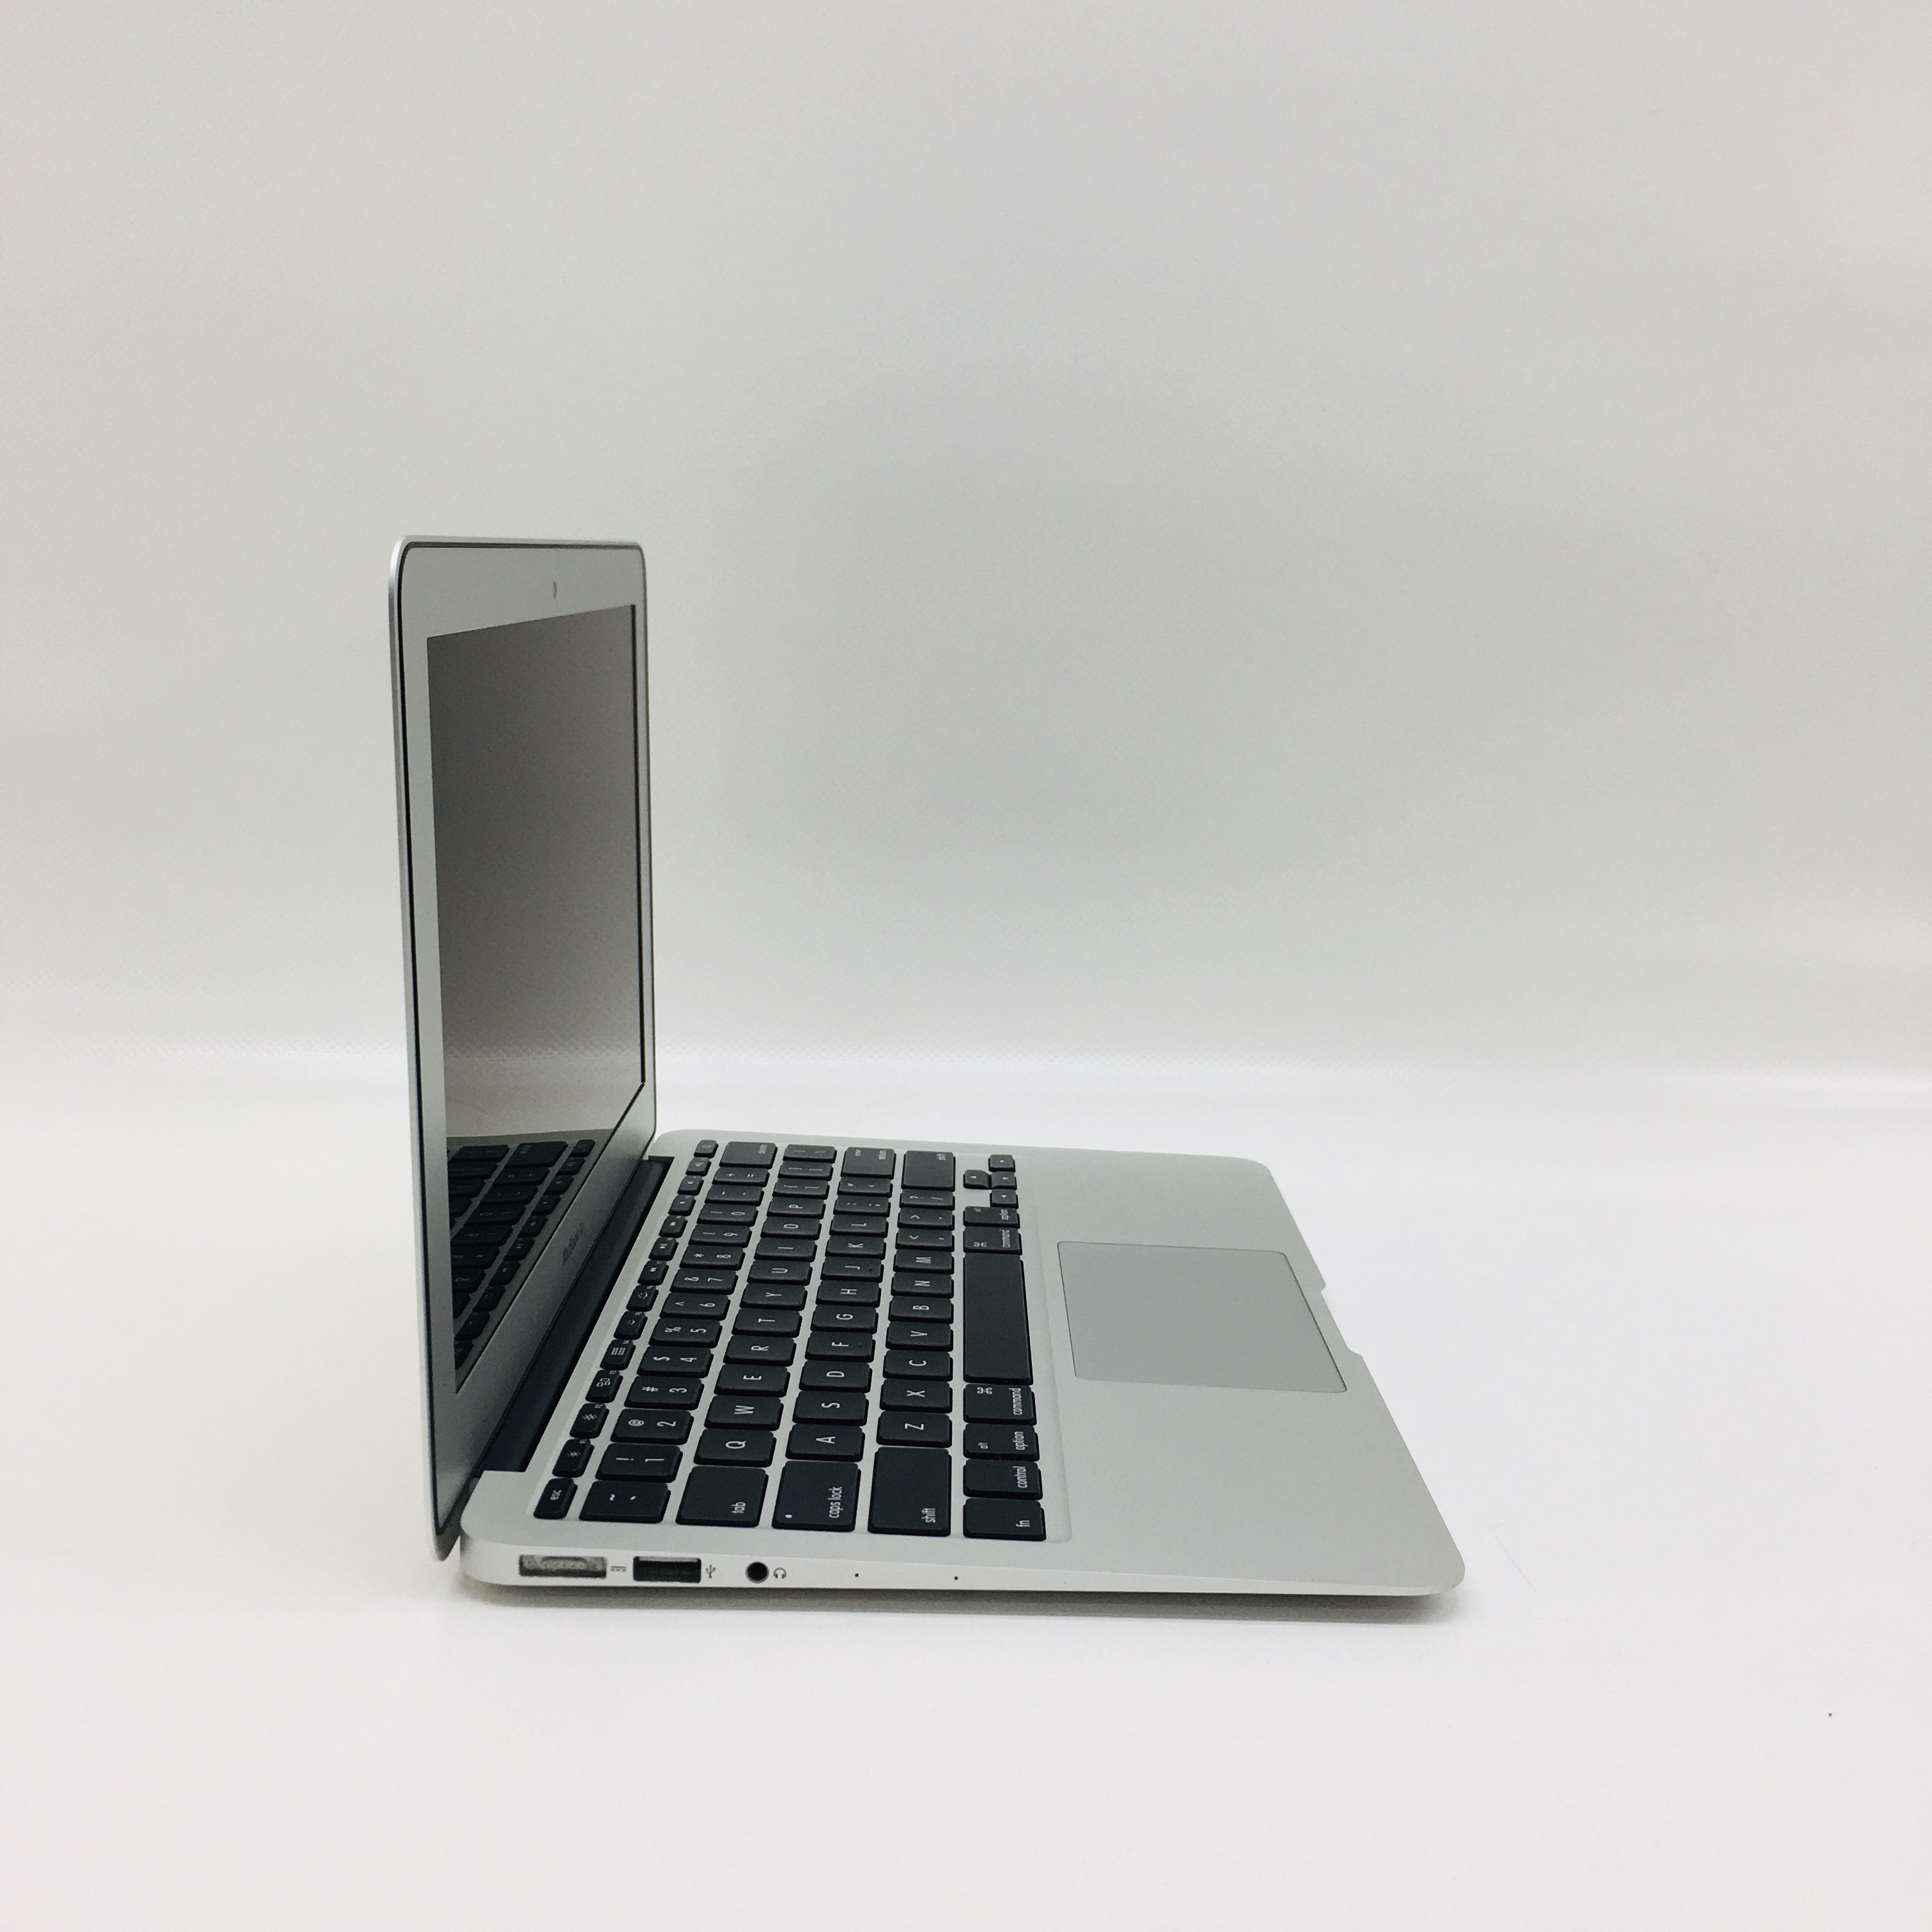 MacBook Air 11" Early 2015 (Intel Core i5 1.6 GHz 4 GB RAM 512 GB SSD), Intel Core i5 1.6 GHz, 4 GB RAM, 512 GB SSD, image 4